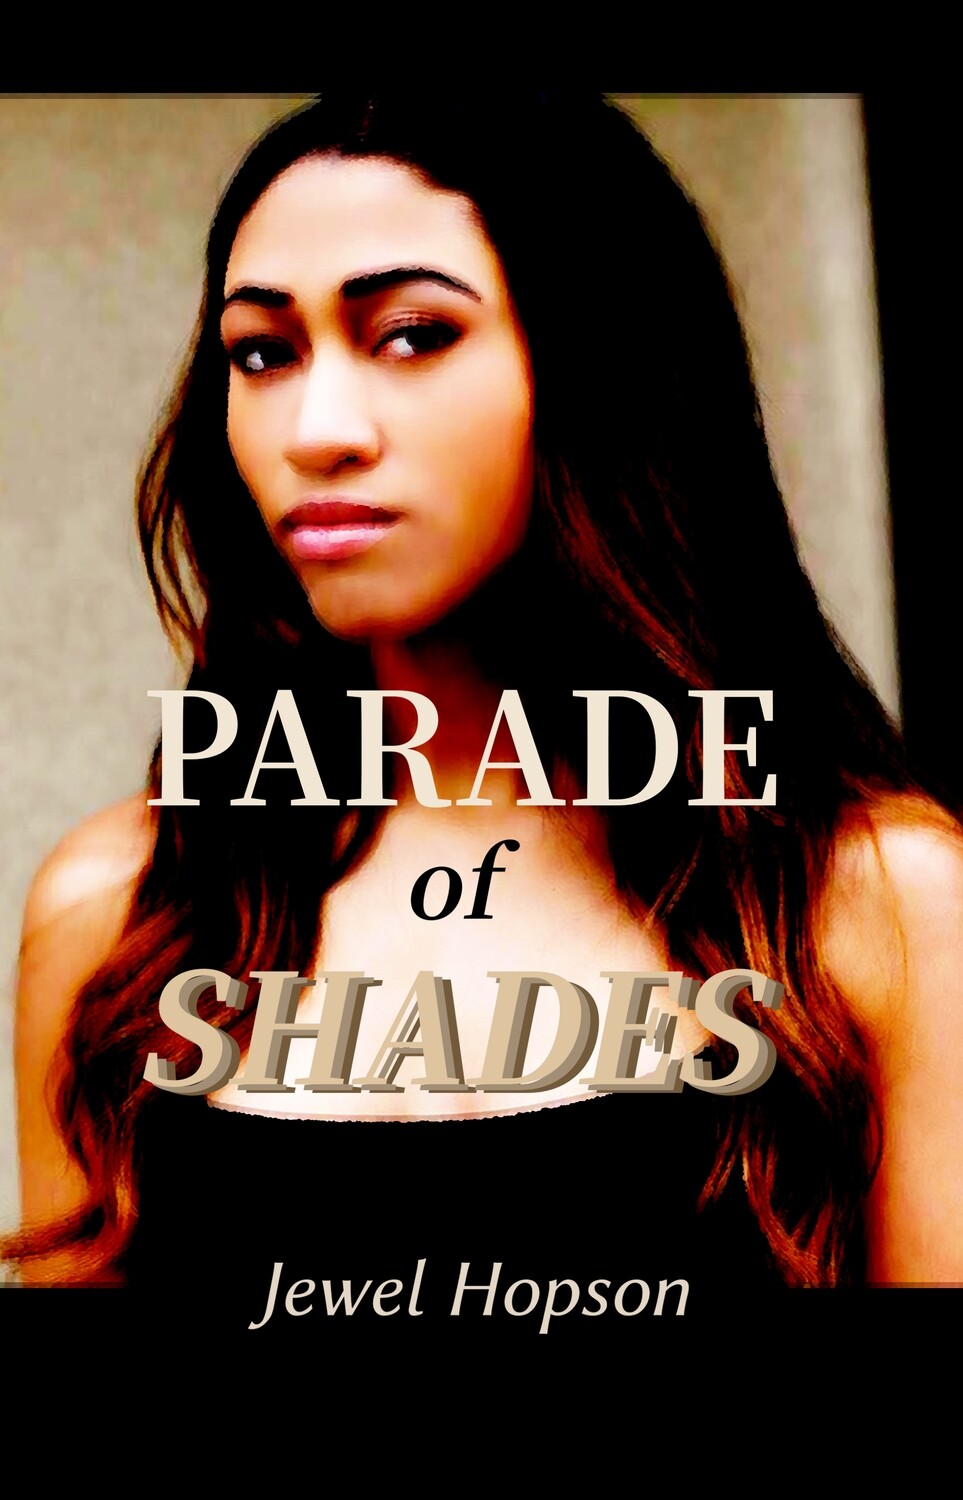 Parade of Shades, by Jewel Hopson